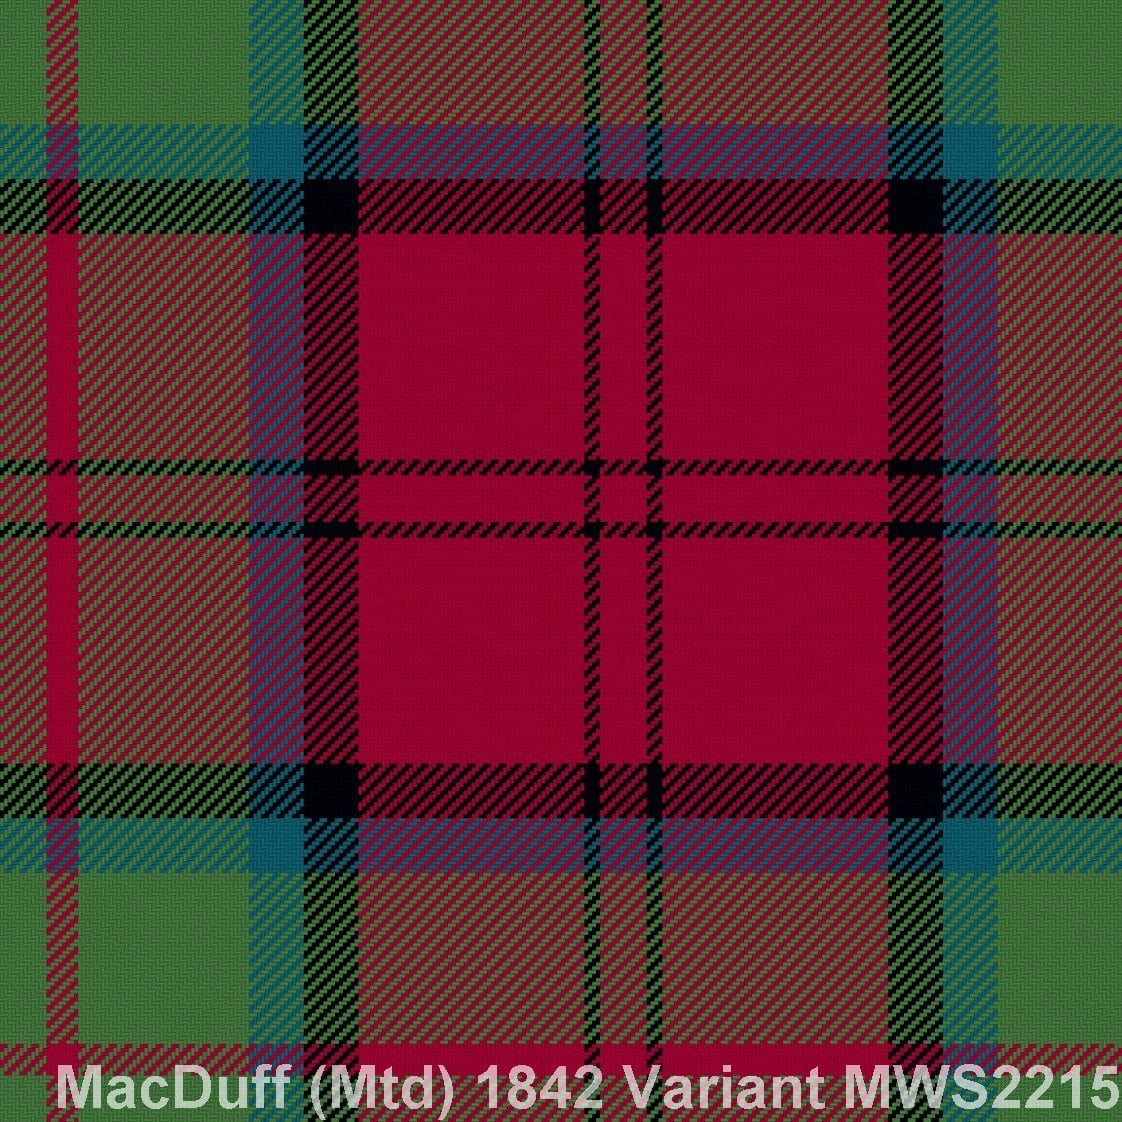 MacDuff Muted – 1842 Variant